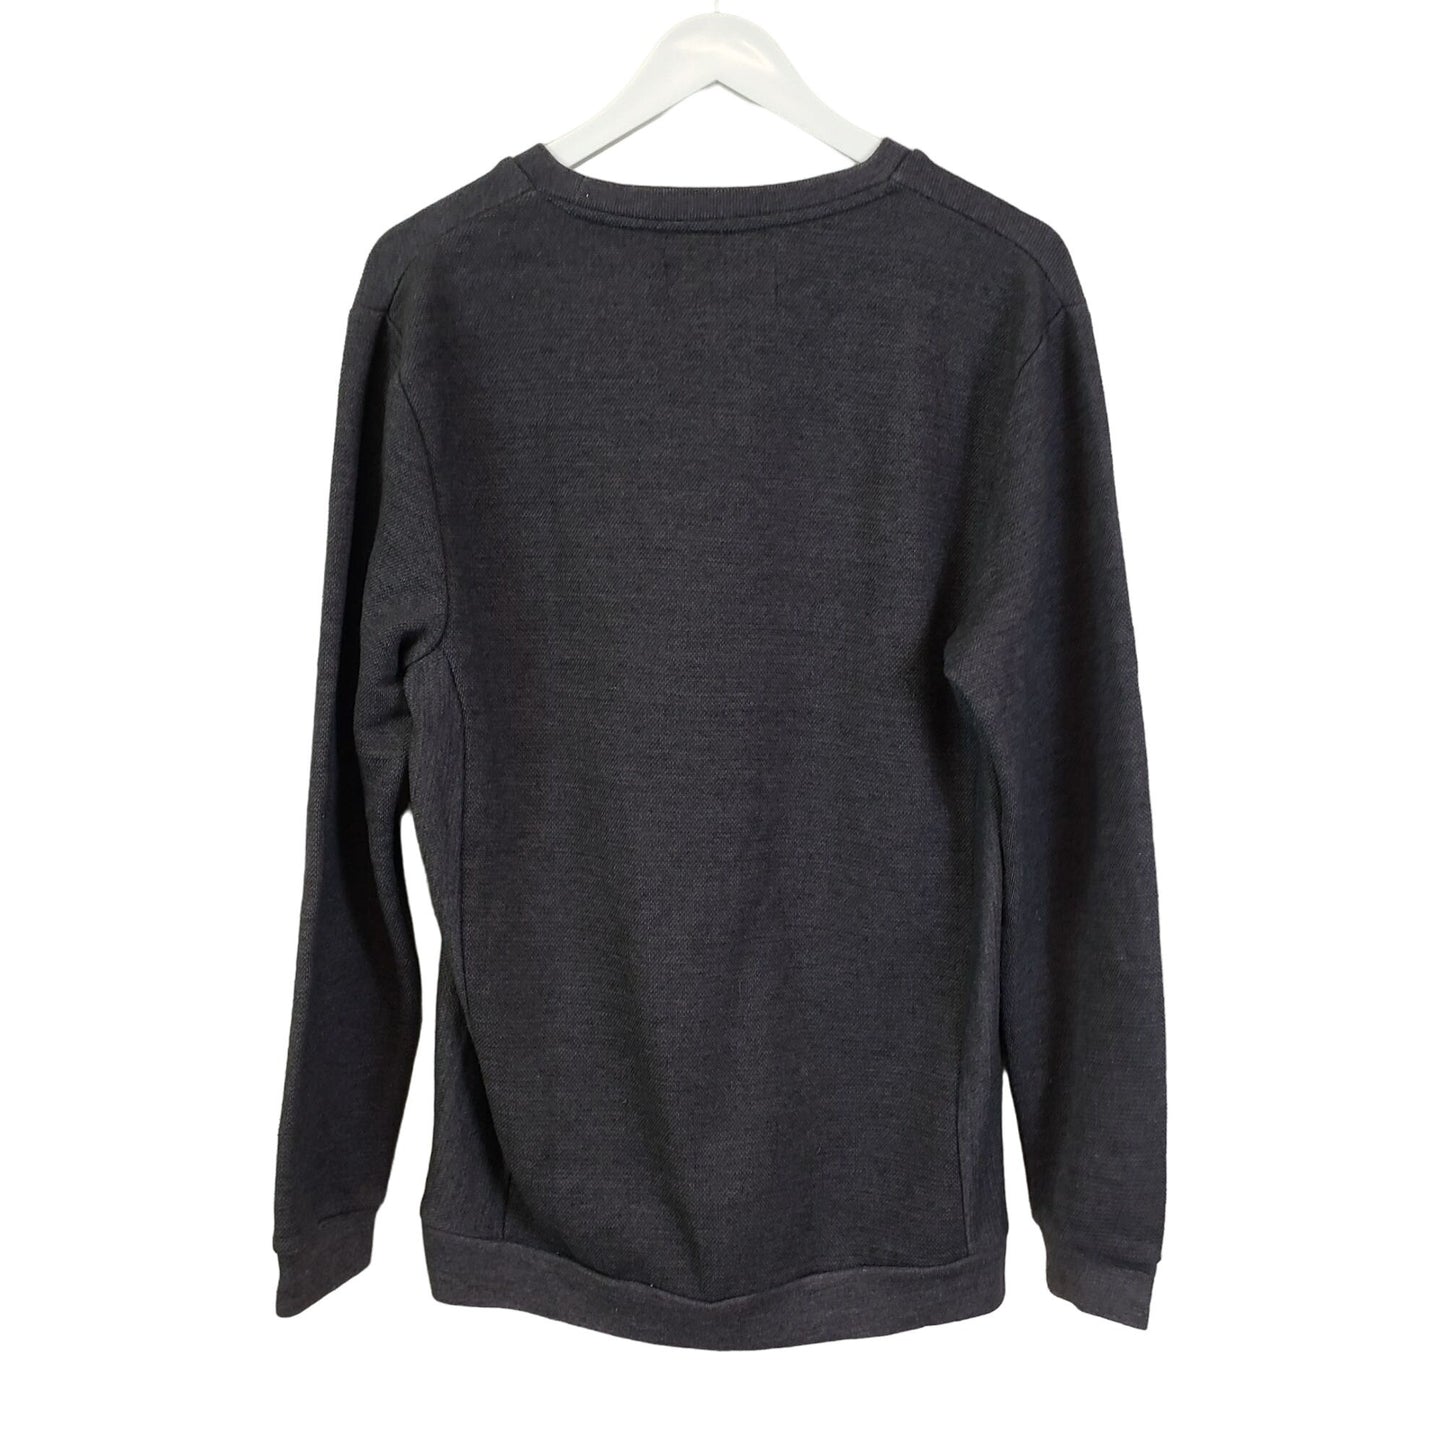 Zara Essentials Woven Knit Sweatshirt Top Size Large